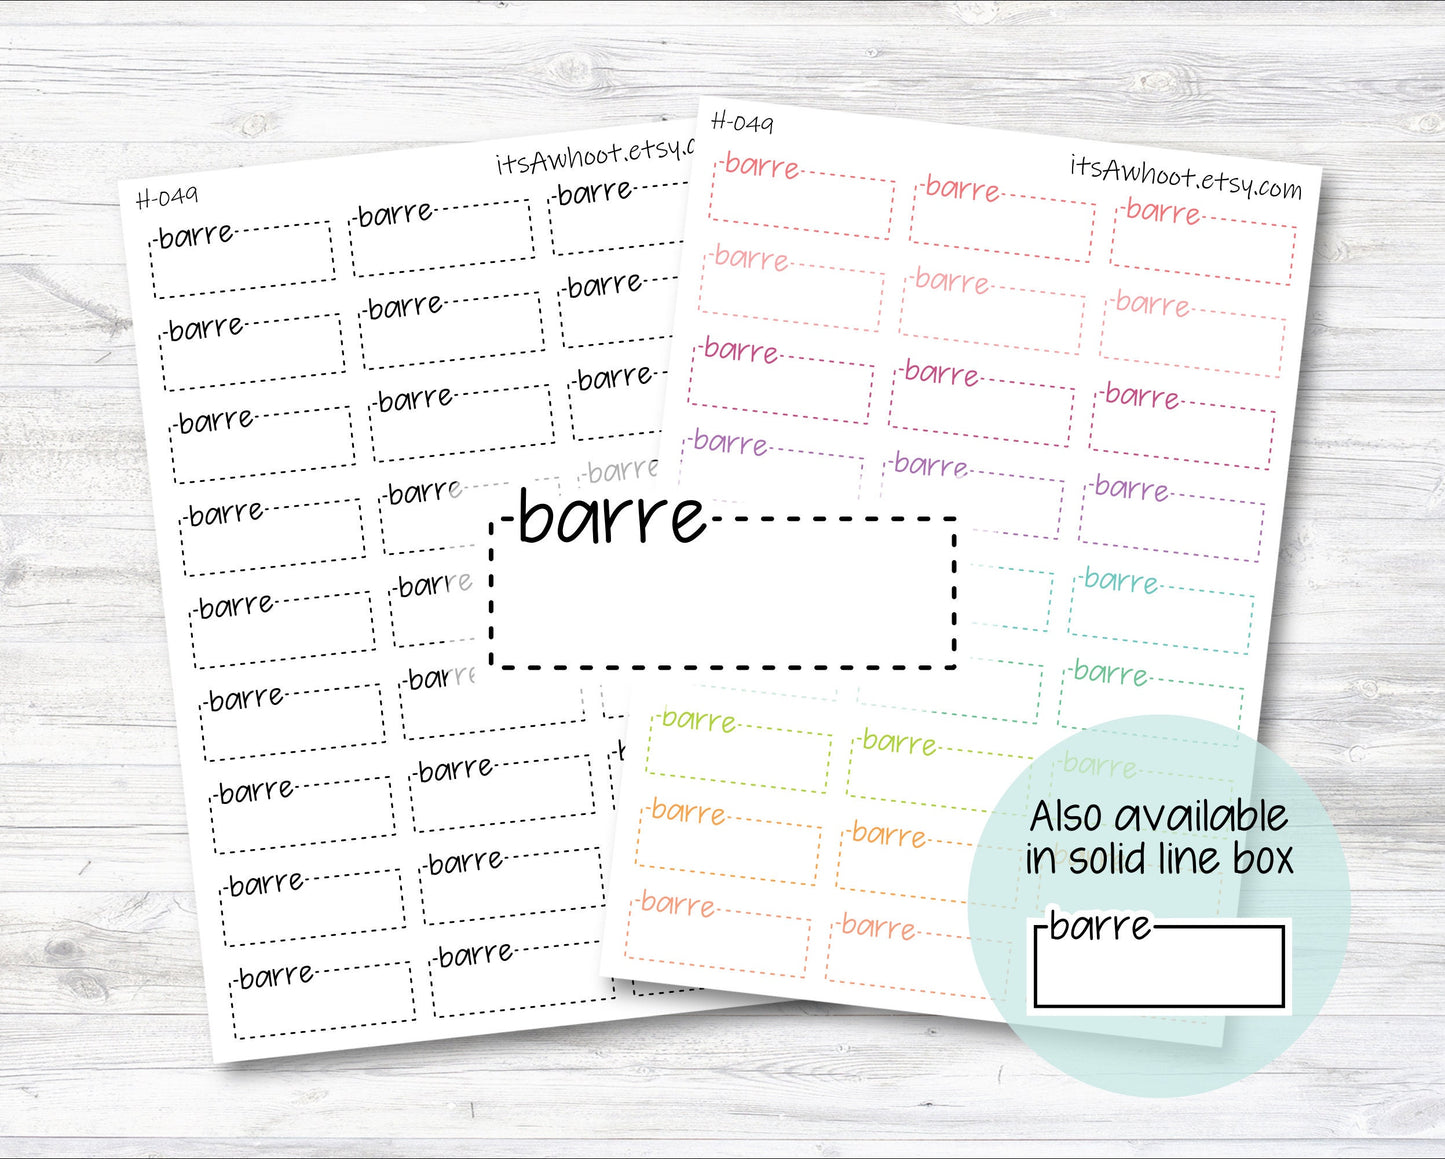 BARRE Quarter Box Label Planner Stickers - Dash or Solid (H049)